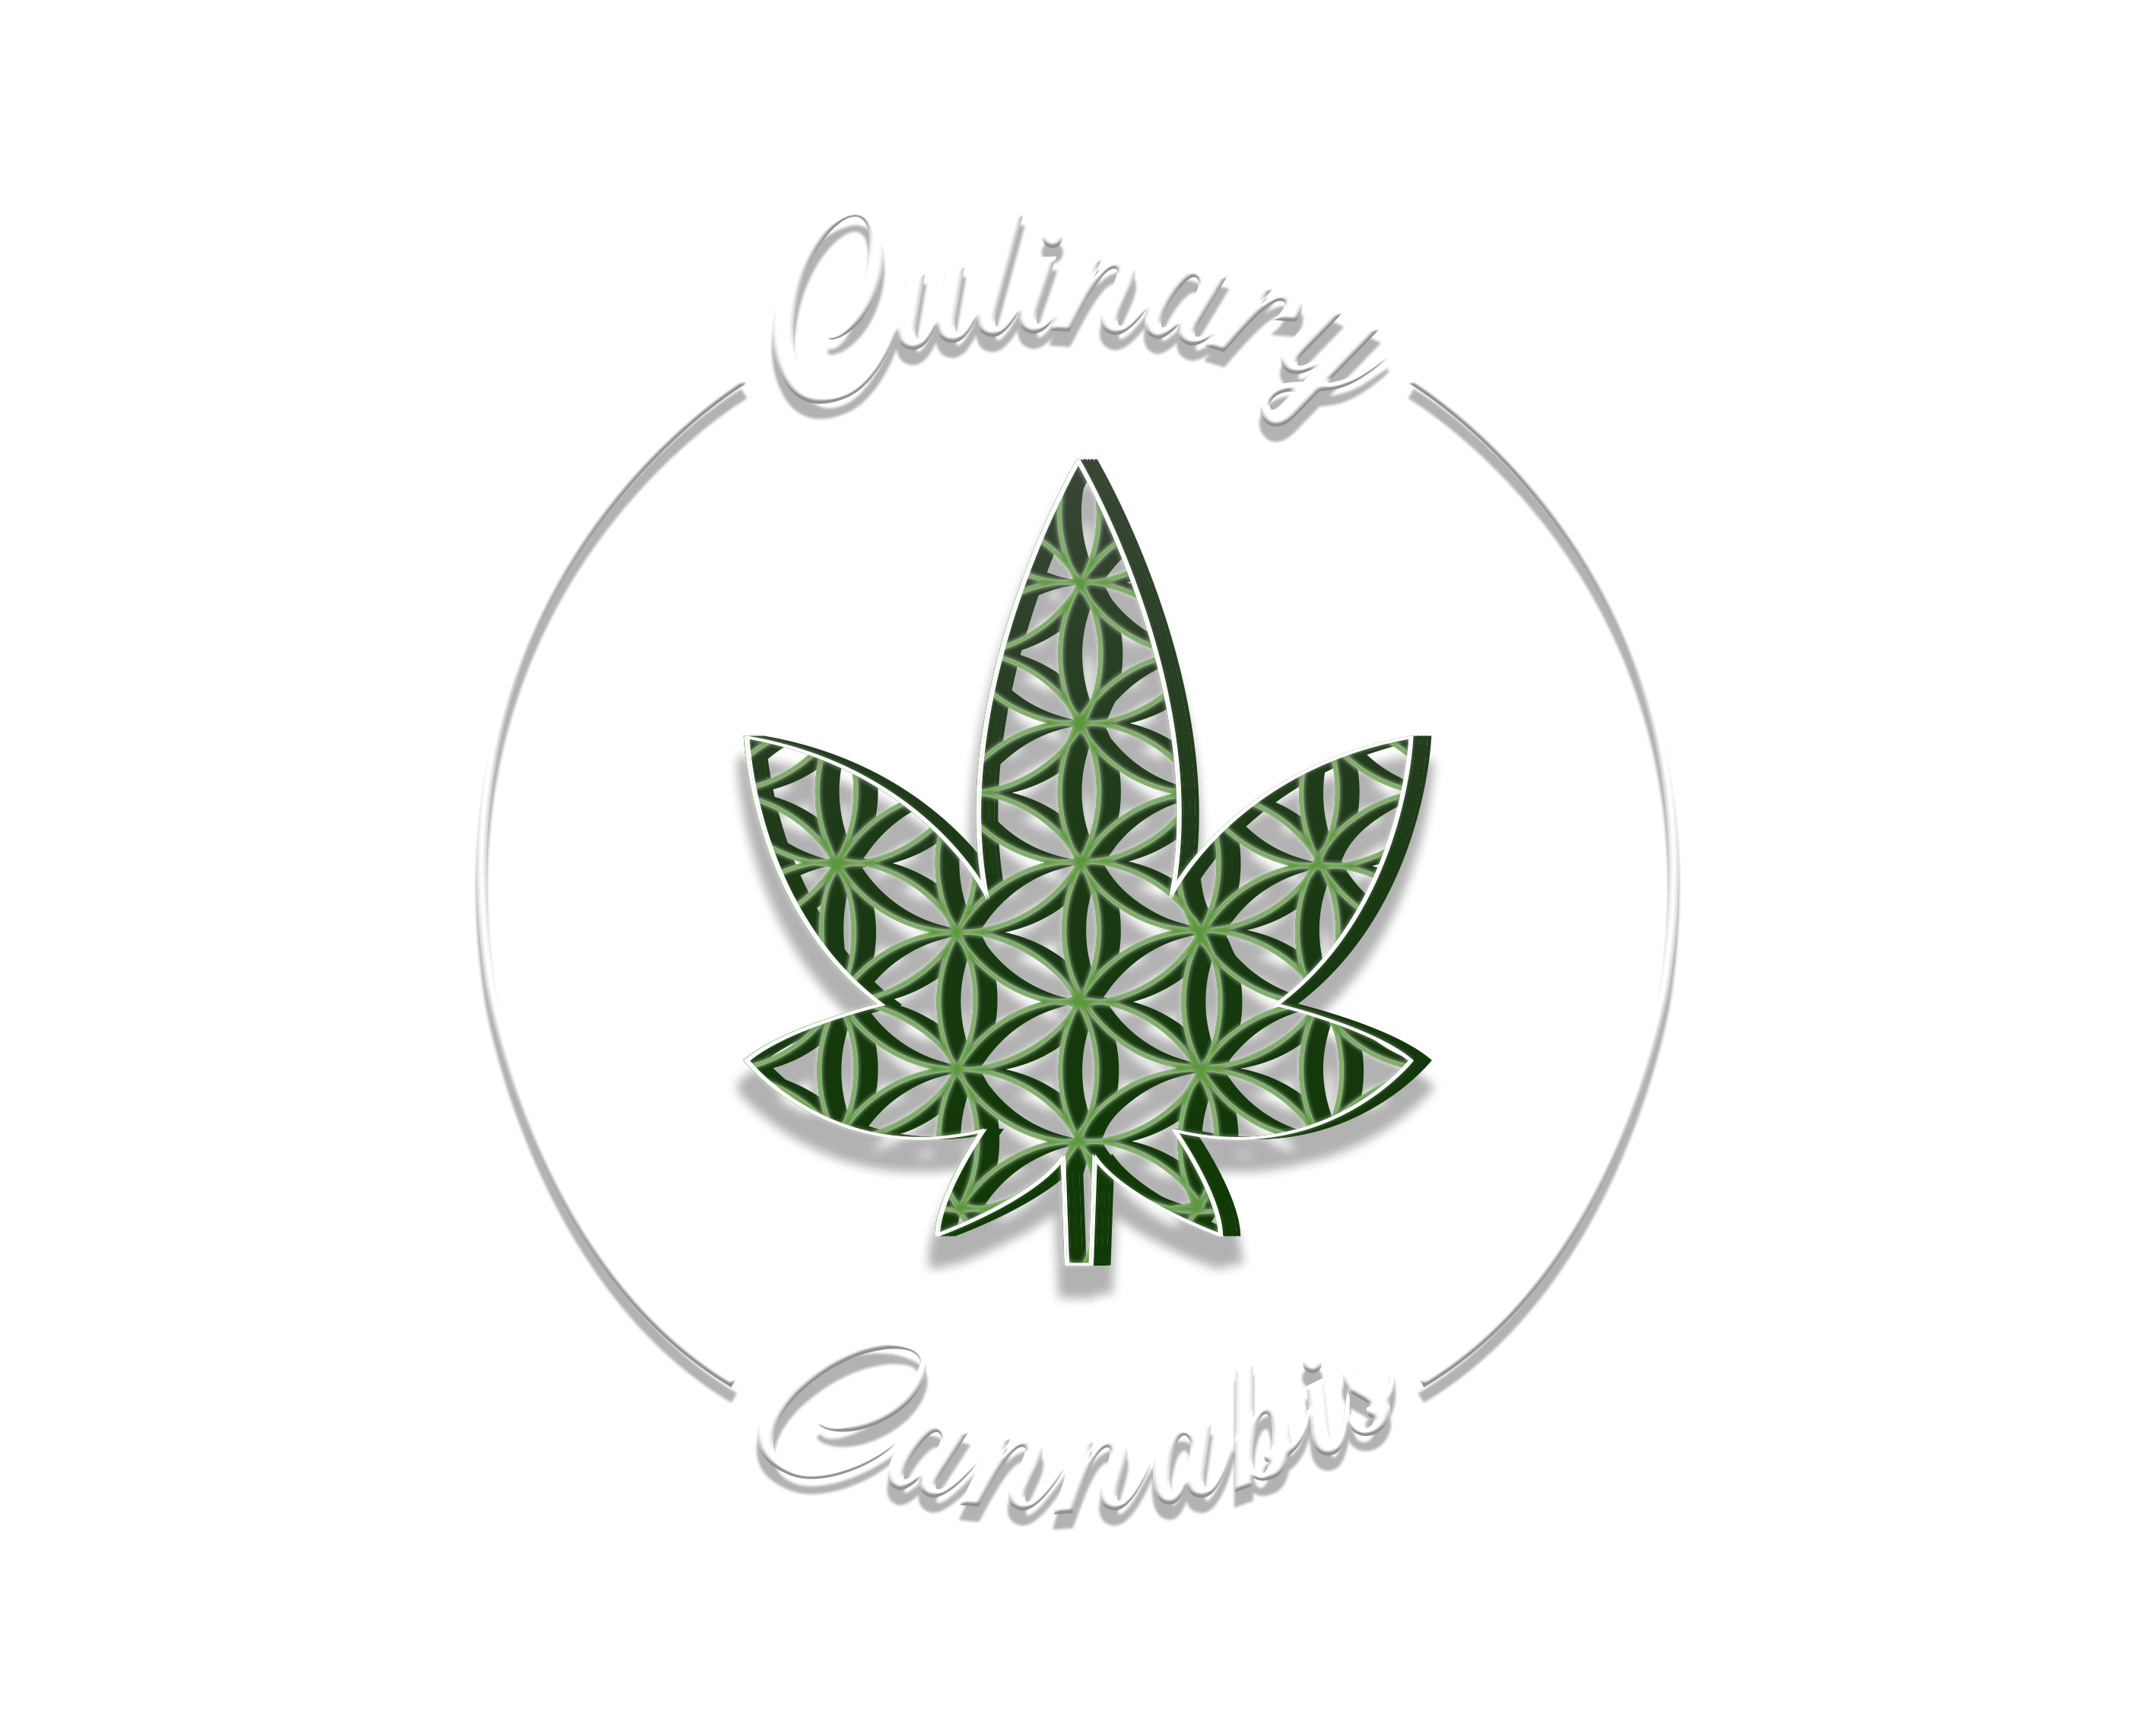 Culinary Cannabis